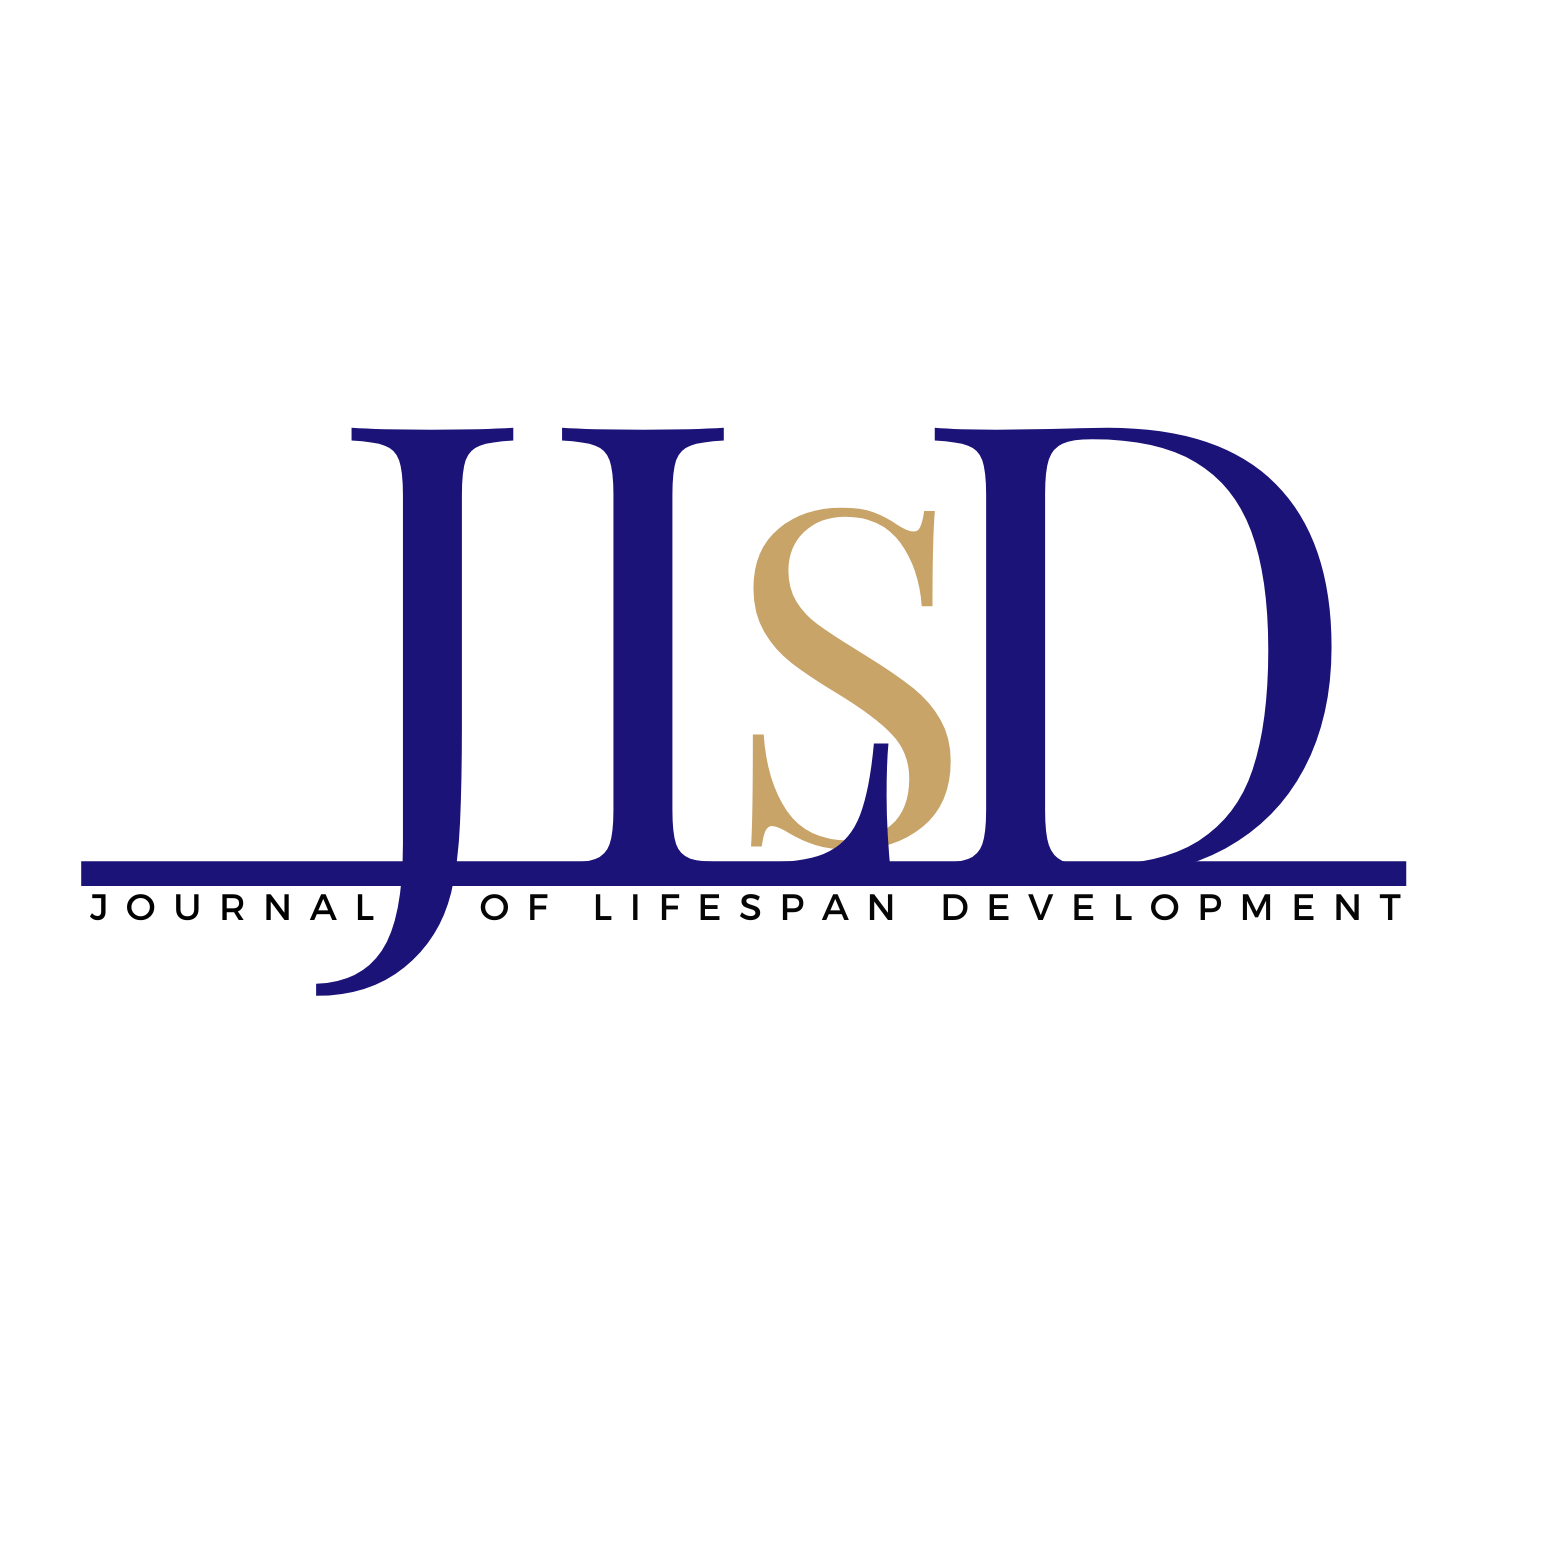 Journal of Lifespan Development (JLSD)